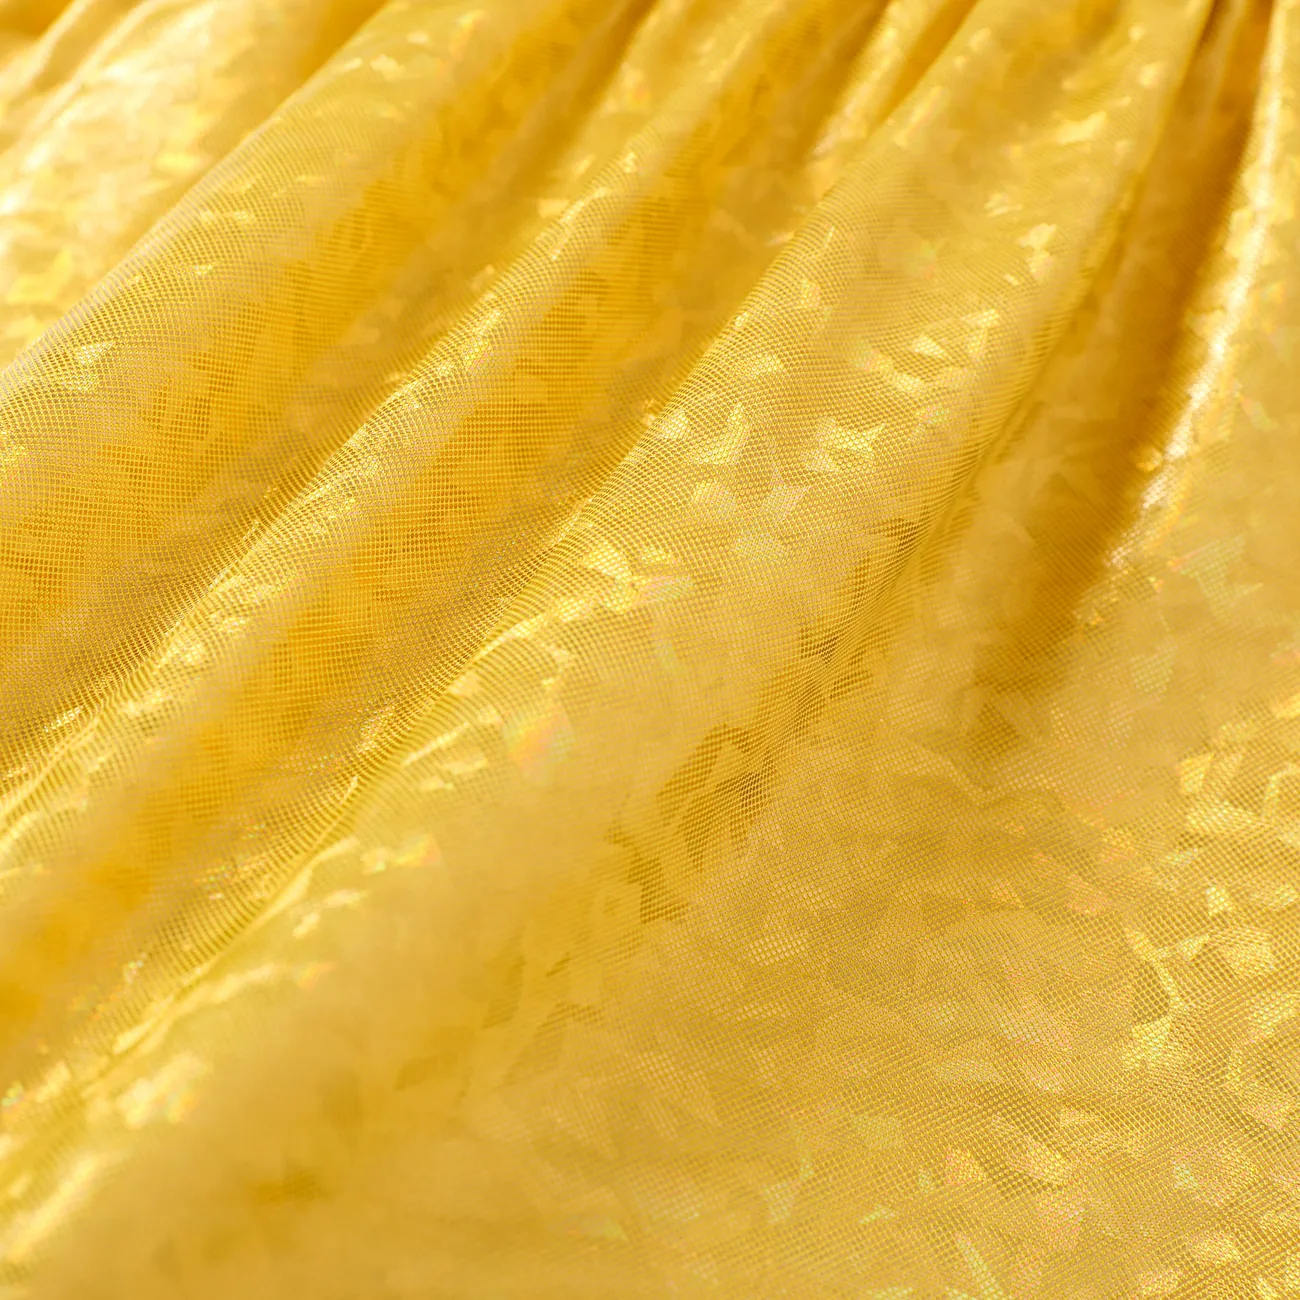 L.O.L. SURPRISE! Toddler Girl/Kid Girl Laser embroidered pattern dress
 Yellow big image 1